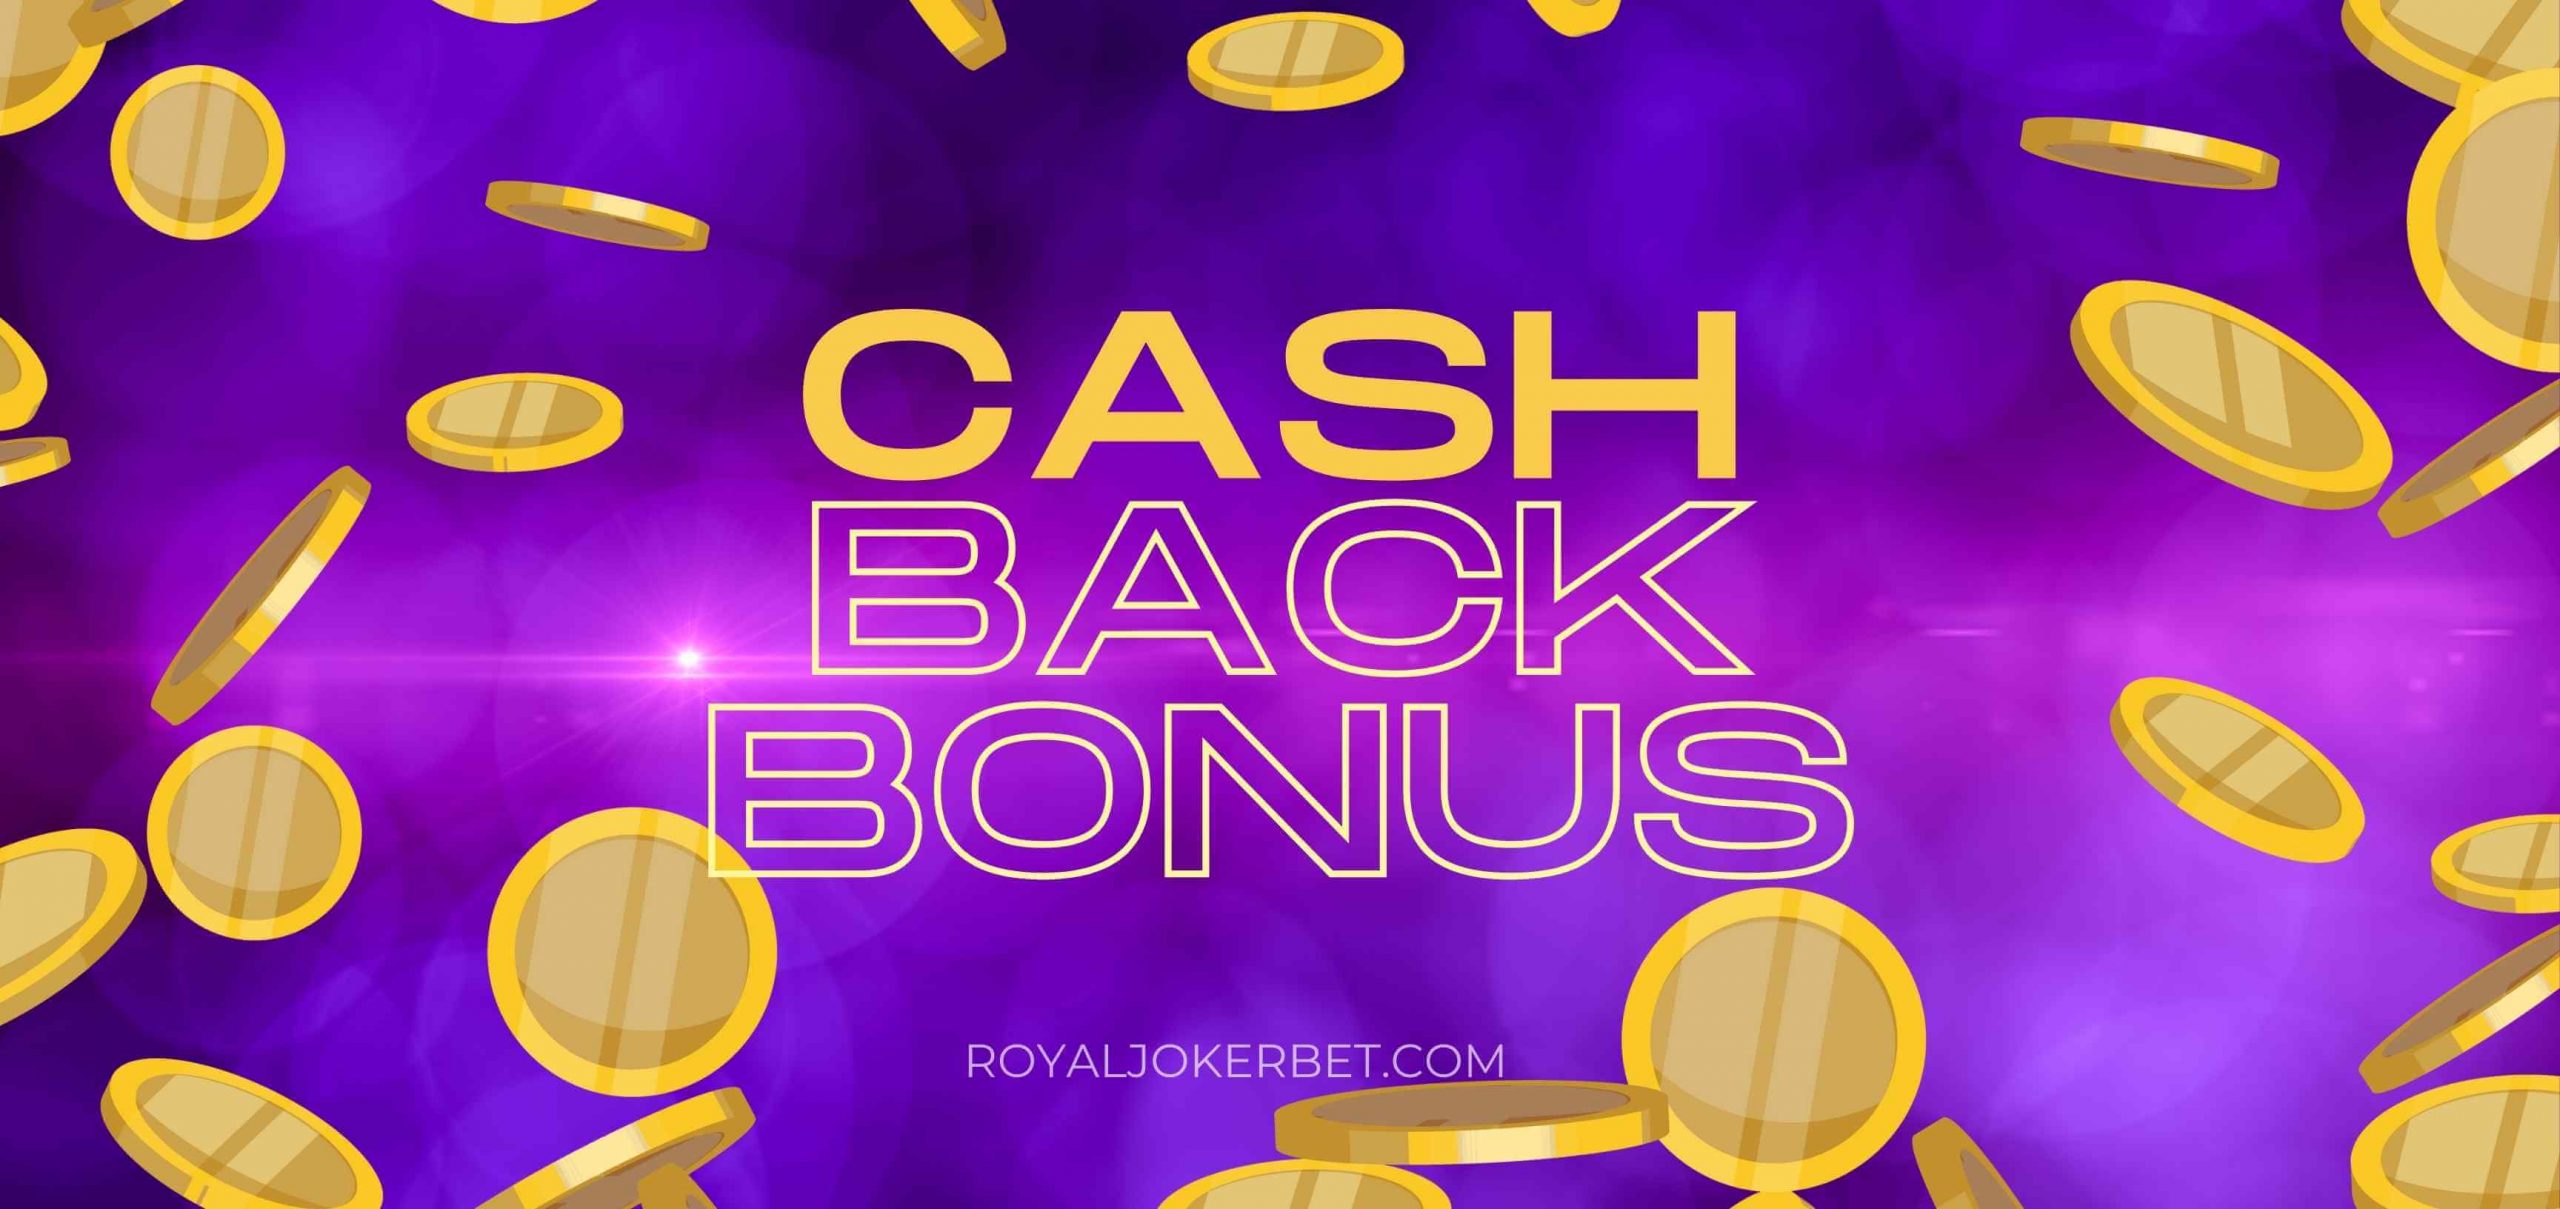 Casino Cashback Offers in Australia